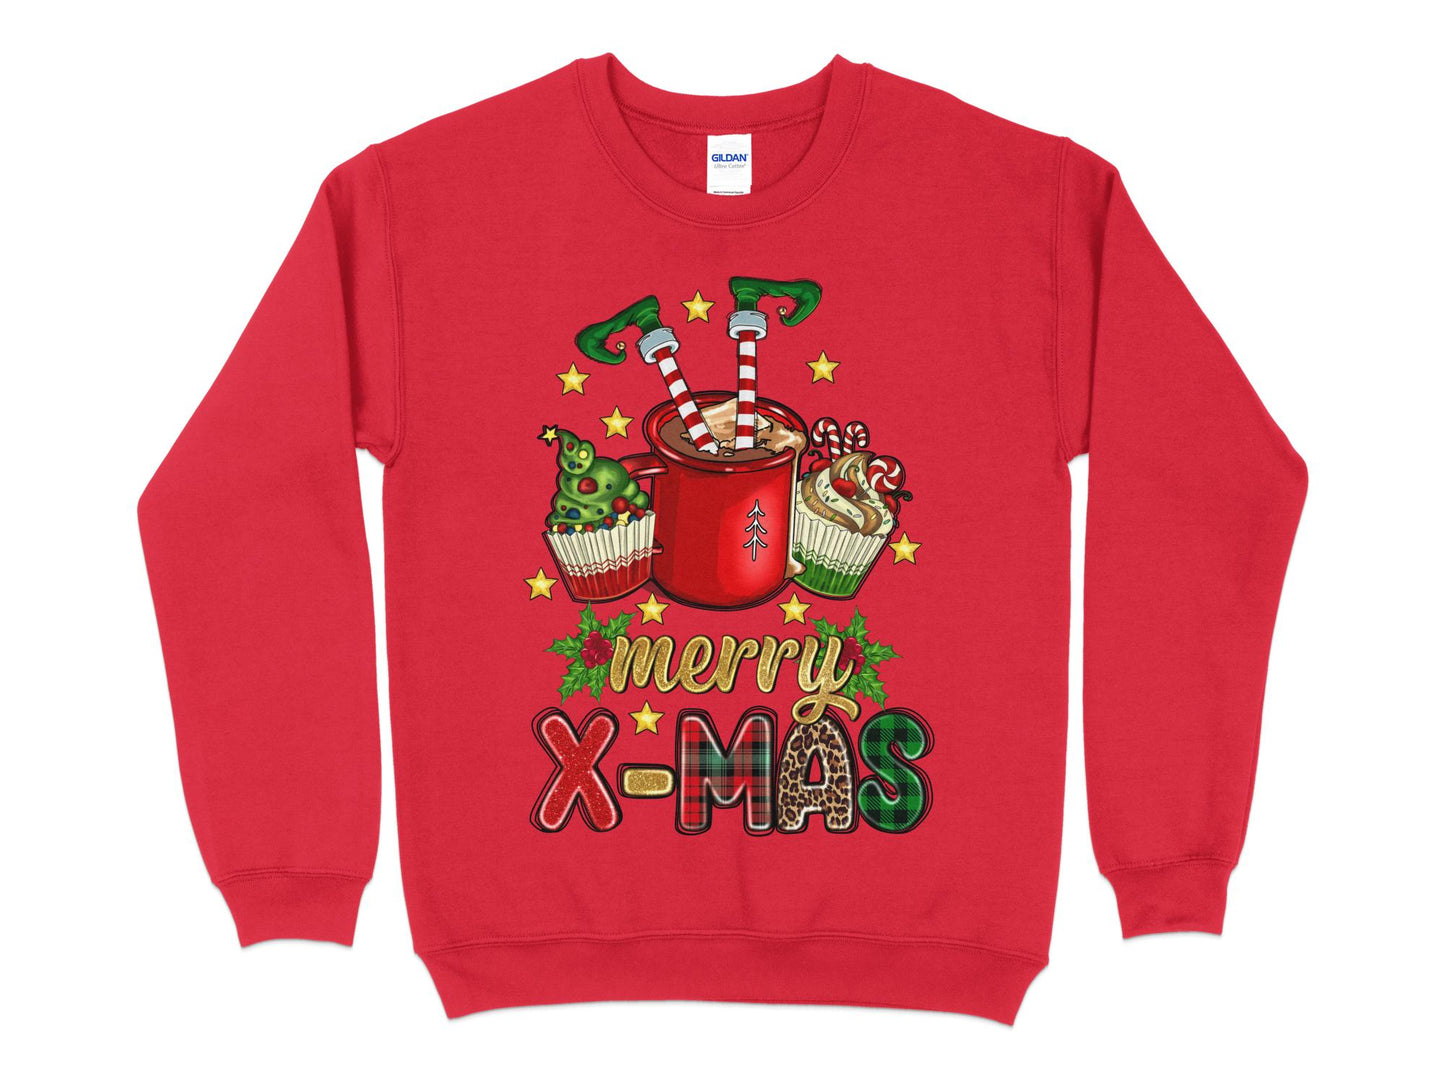 Merry Christmas Elf in Cup Sweatshirt, Funny Christmas Shirt for Women, Christmas Crewneck, funny Holiday Sweater, Plus Size Options - Mardonyx Sweatshirt S / Red